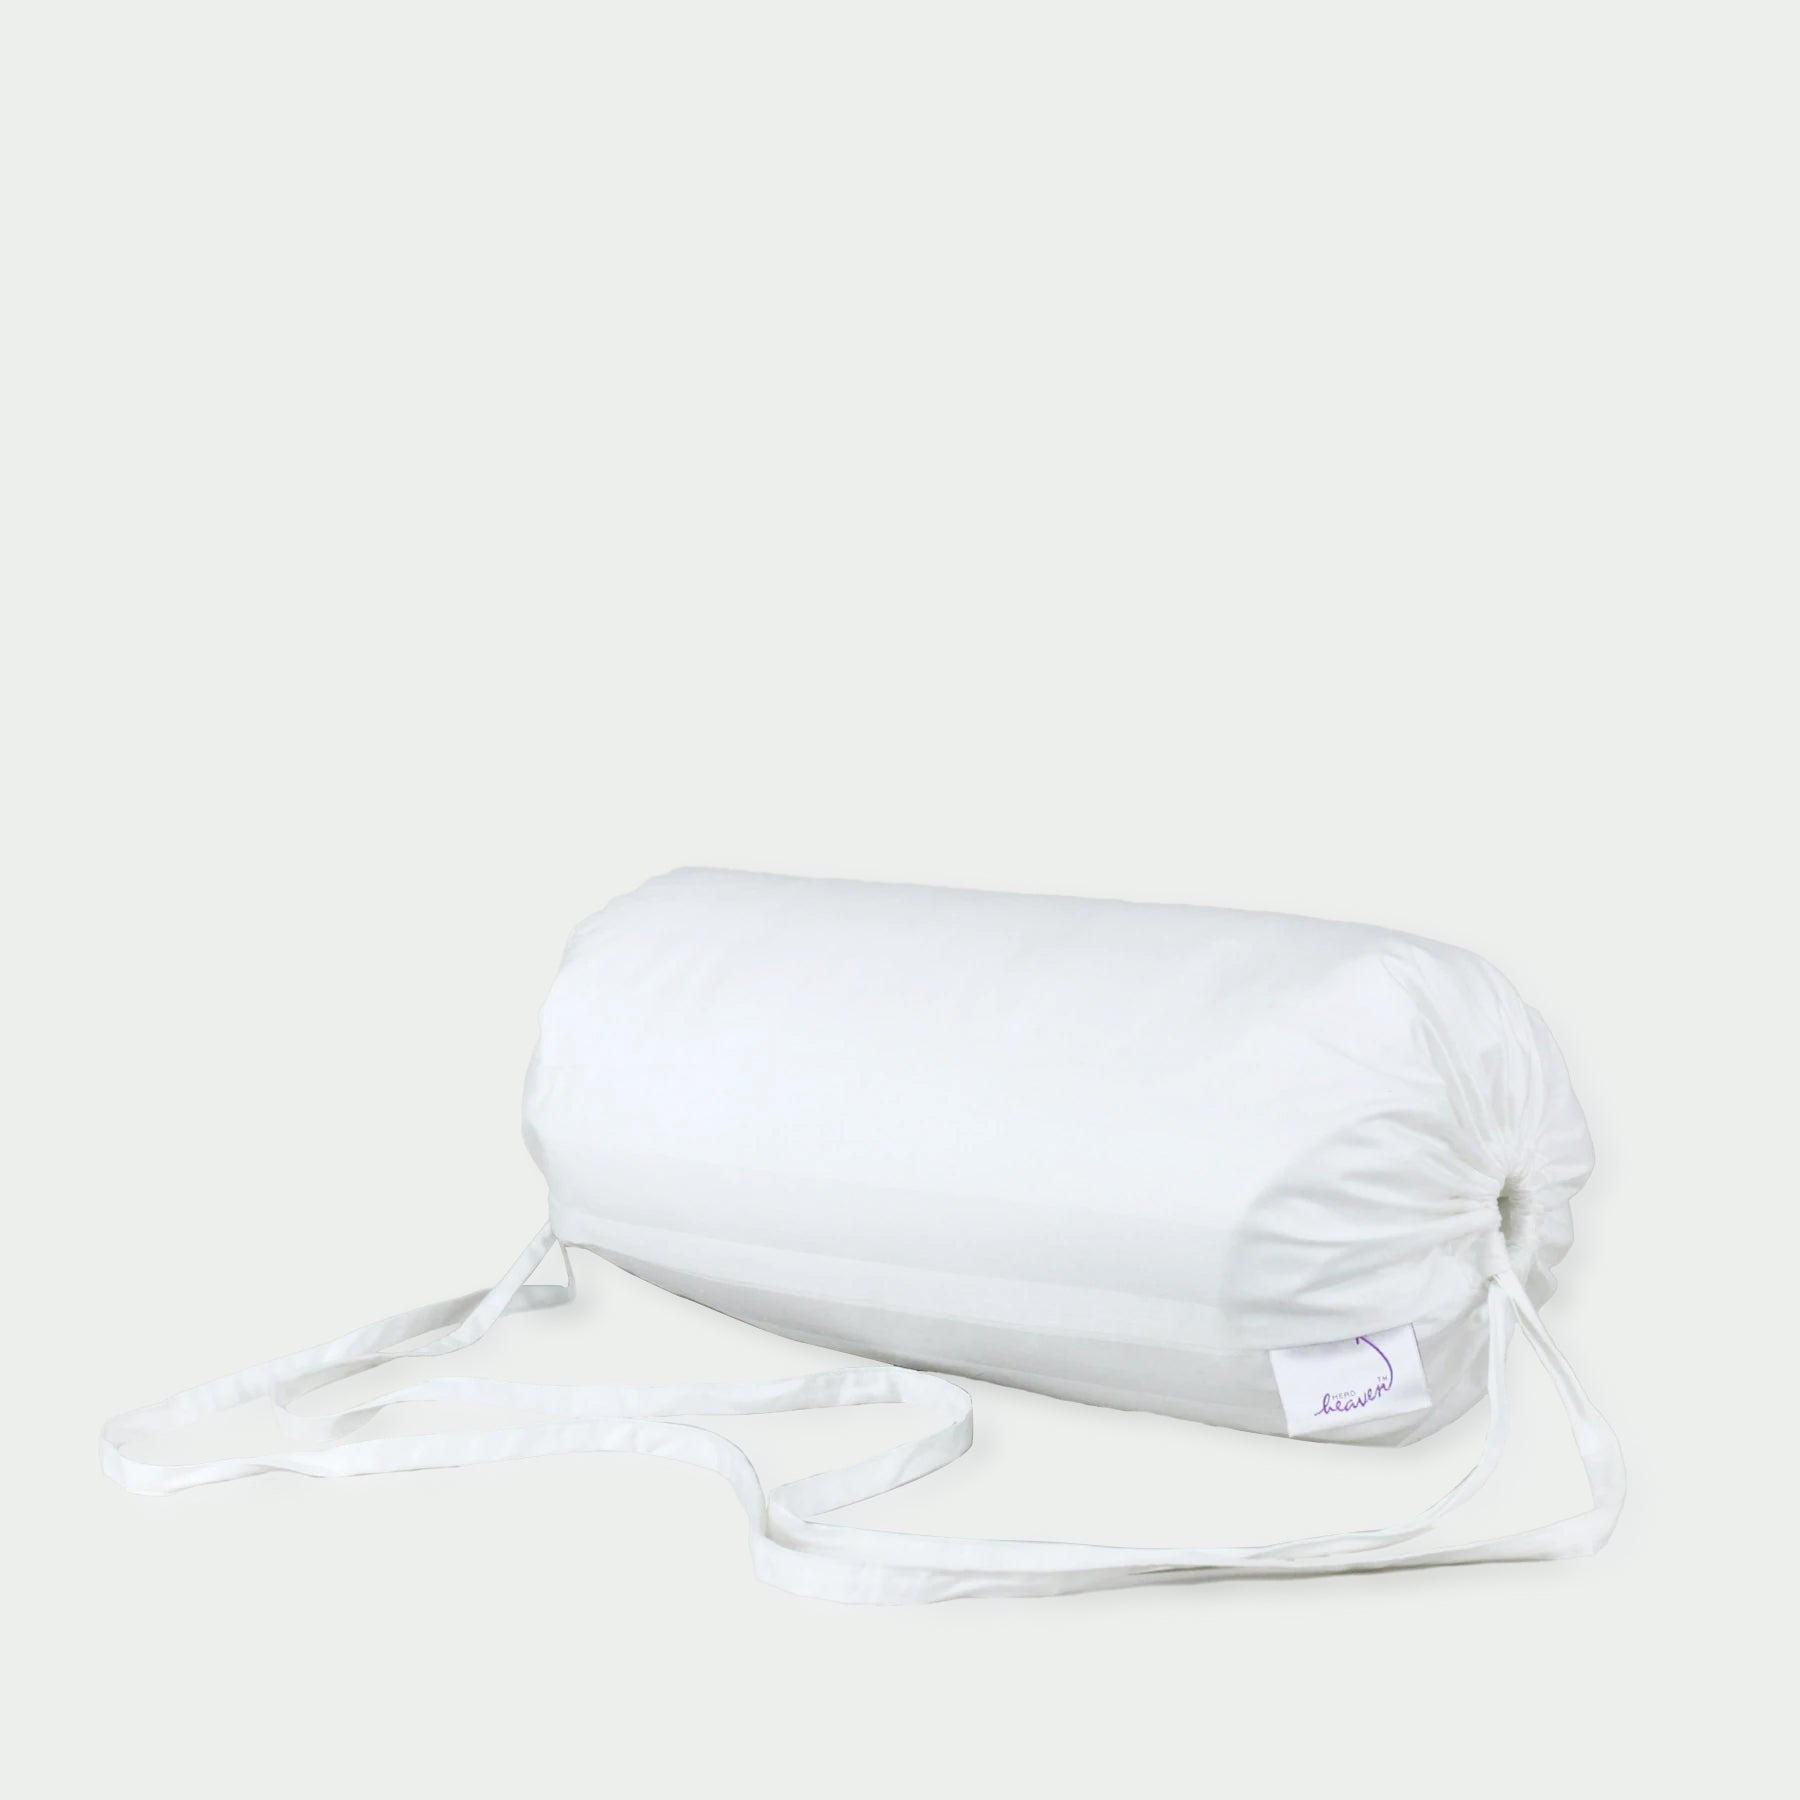 Head Heaven® Travel Pillow and Knapsack, White